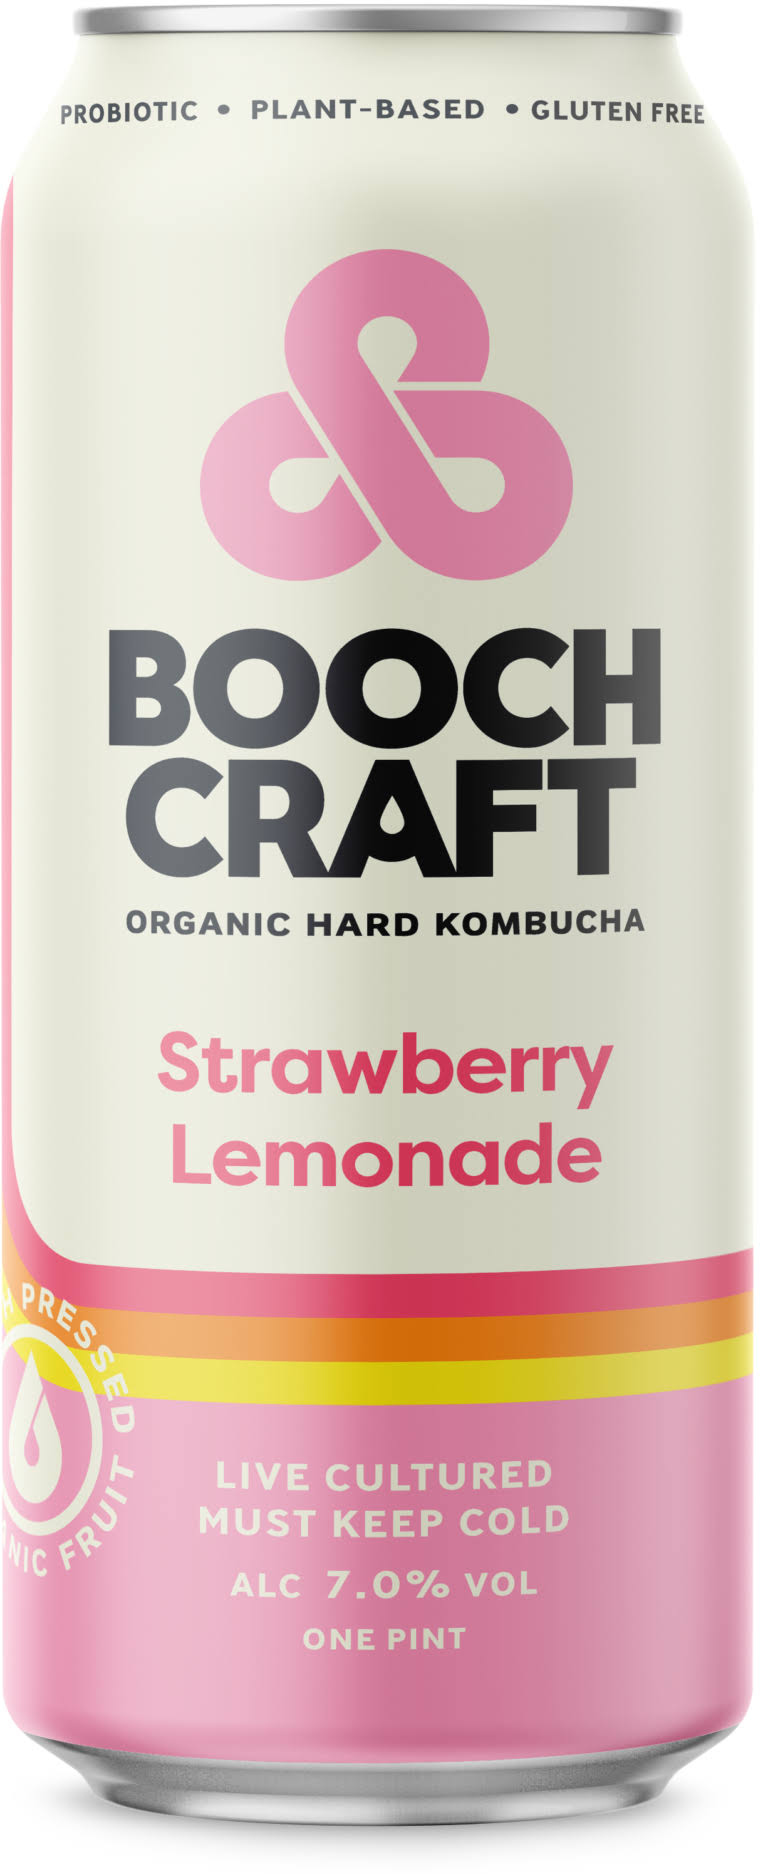 Boochcraft Hard Kombucha, Organic, Strawberry Lemonade - one pint